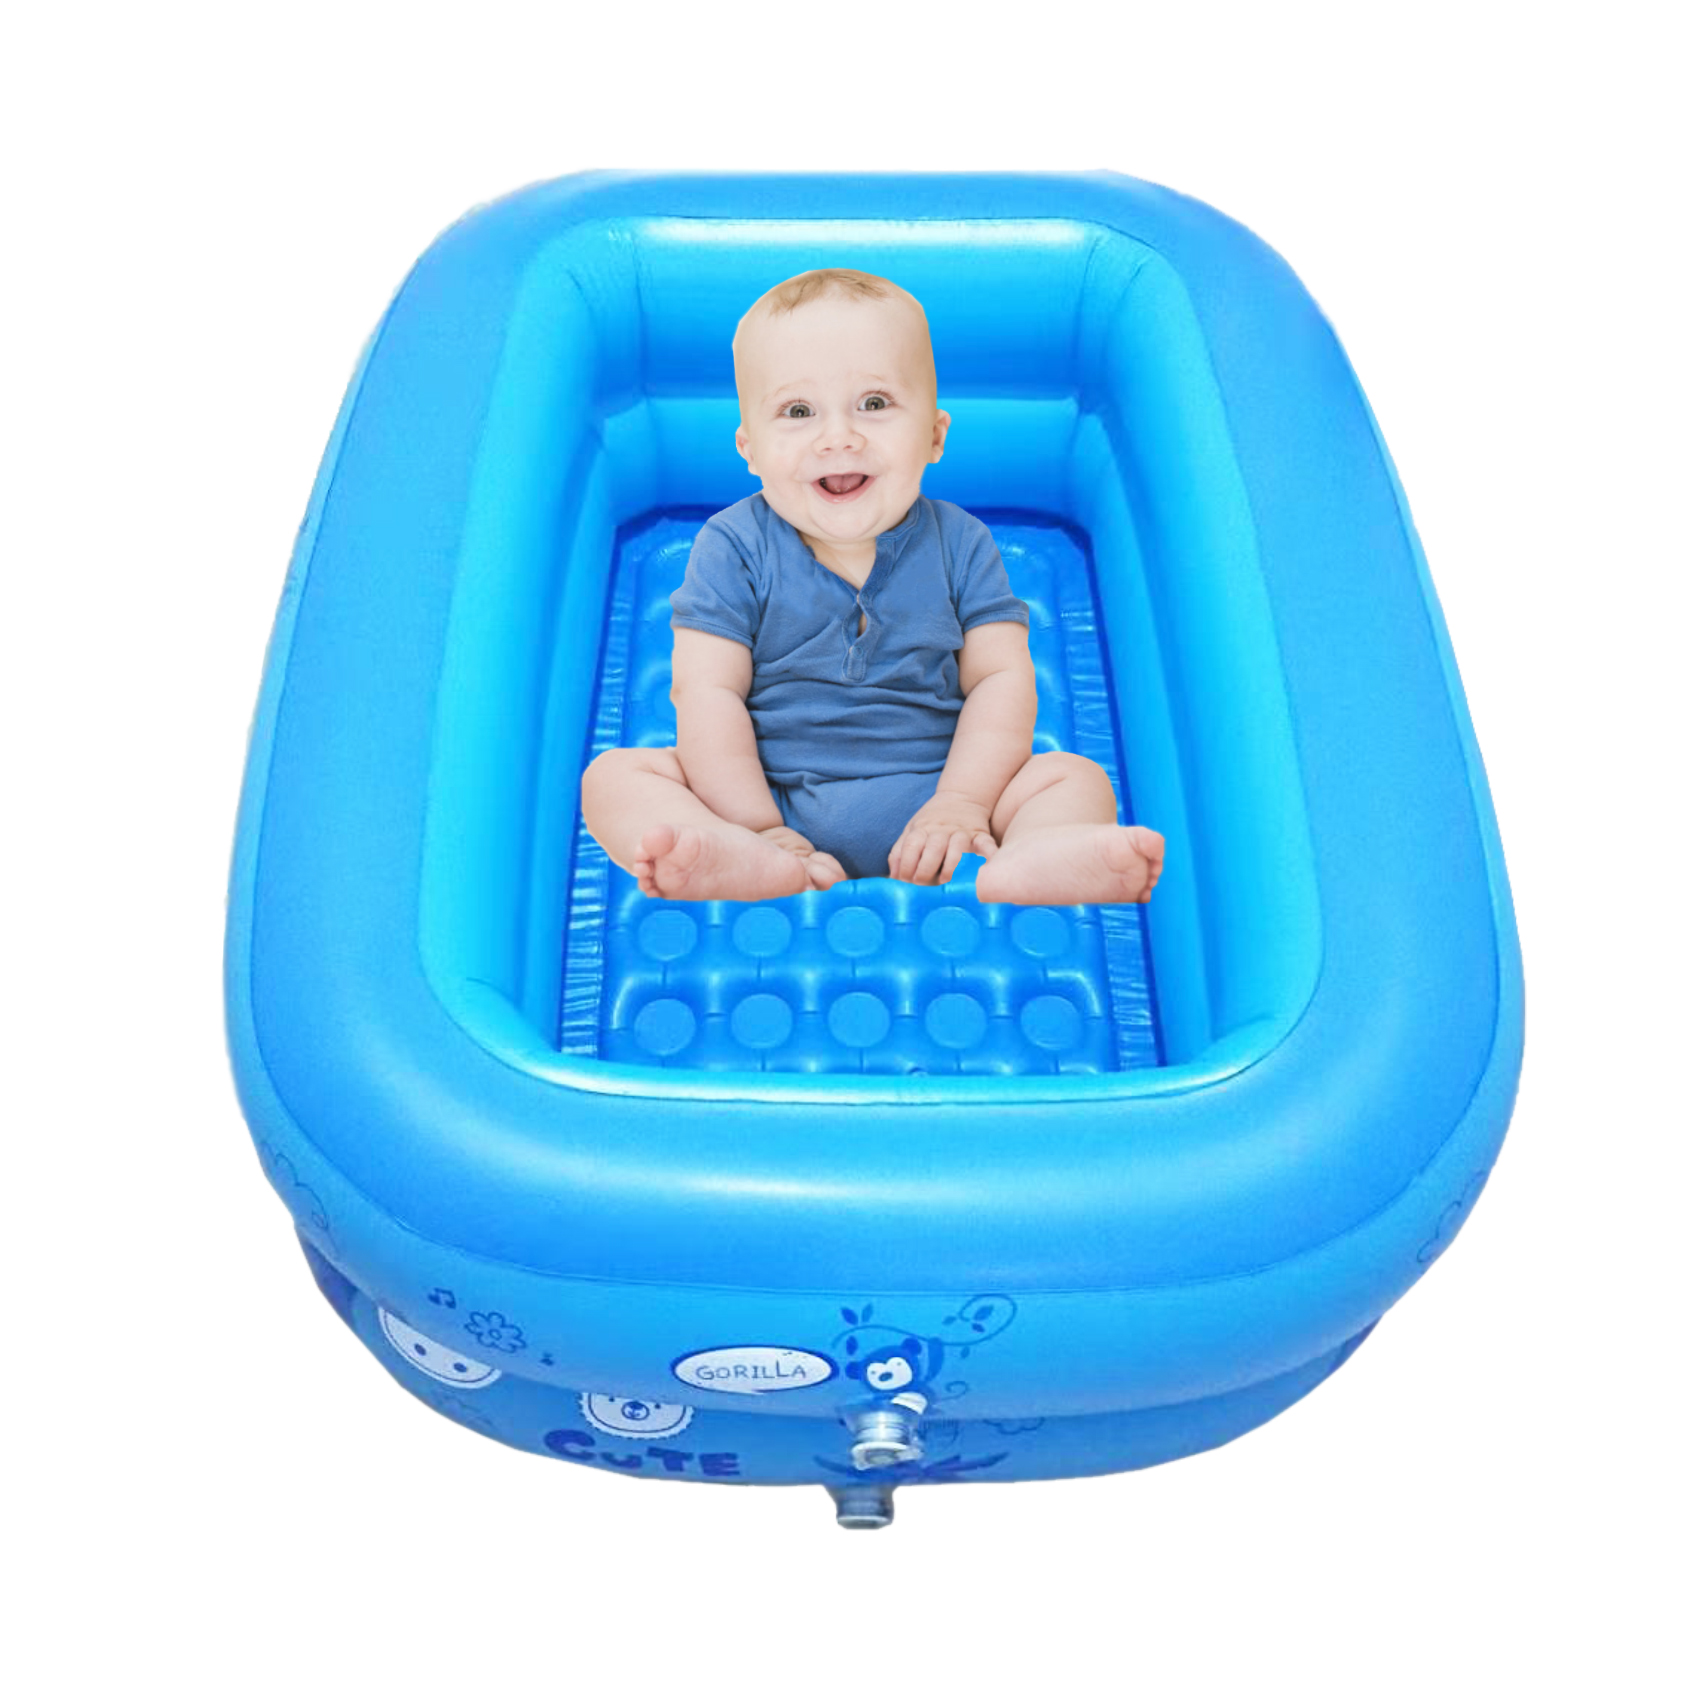 baby-fairBabySPA Home Spa 3 Layer Pool (130 x 85 x 46cm)